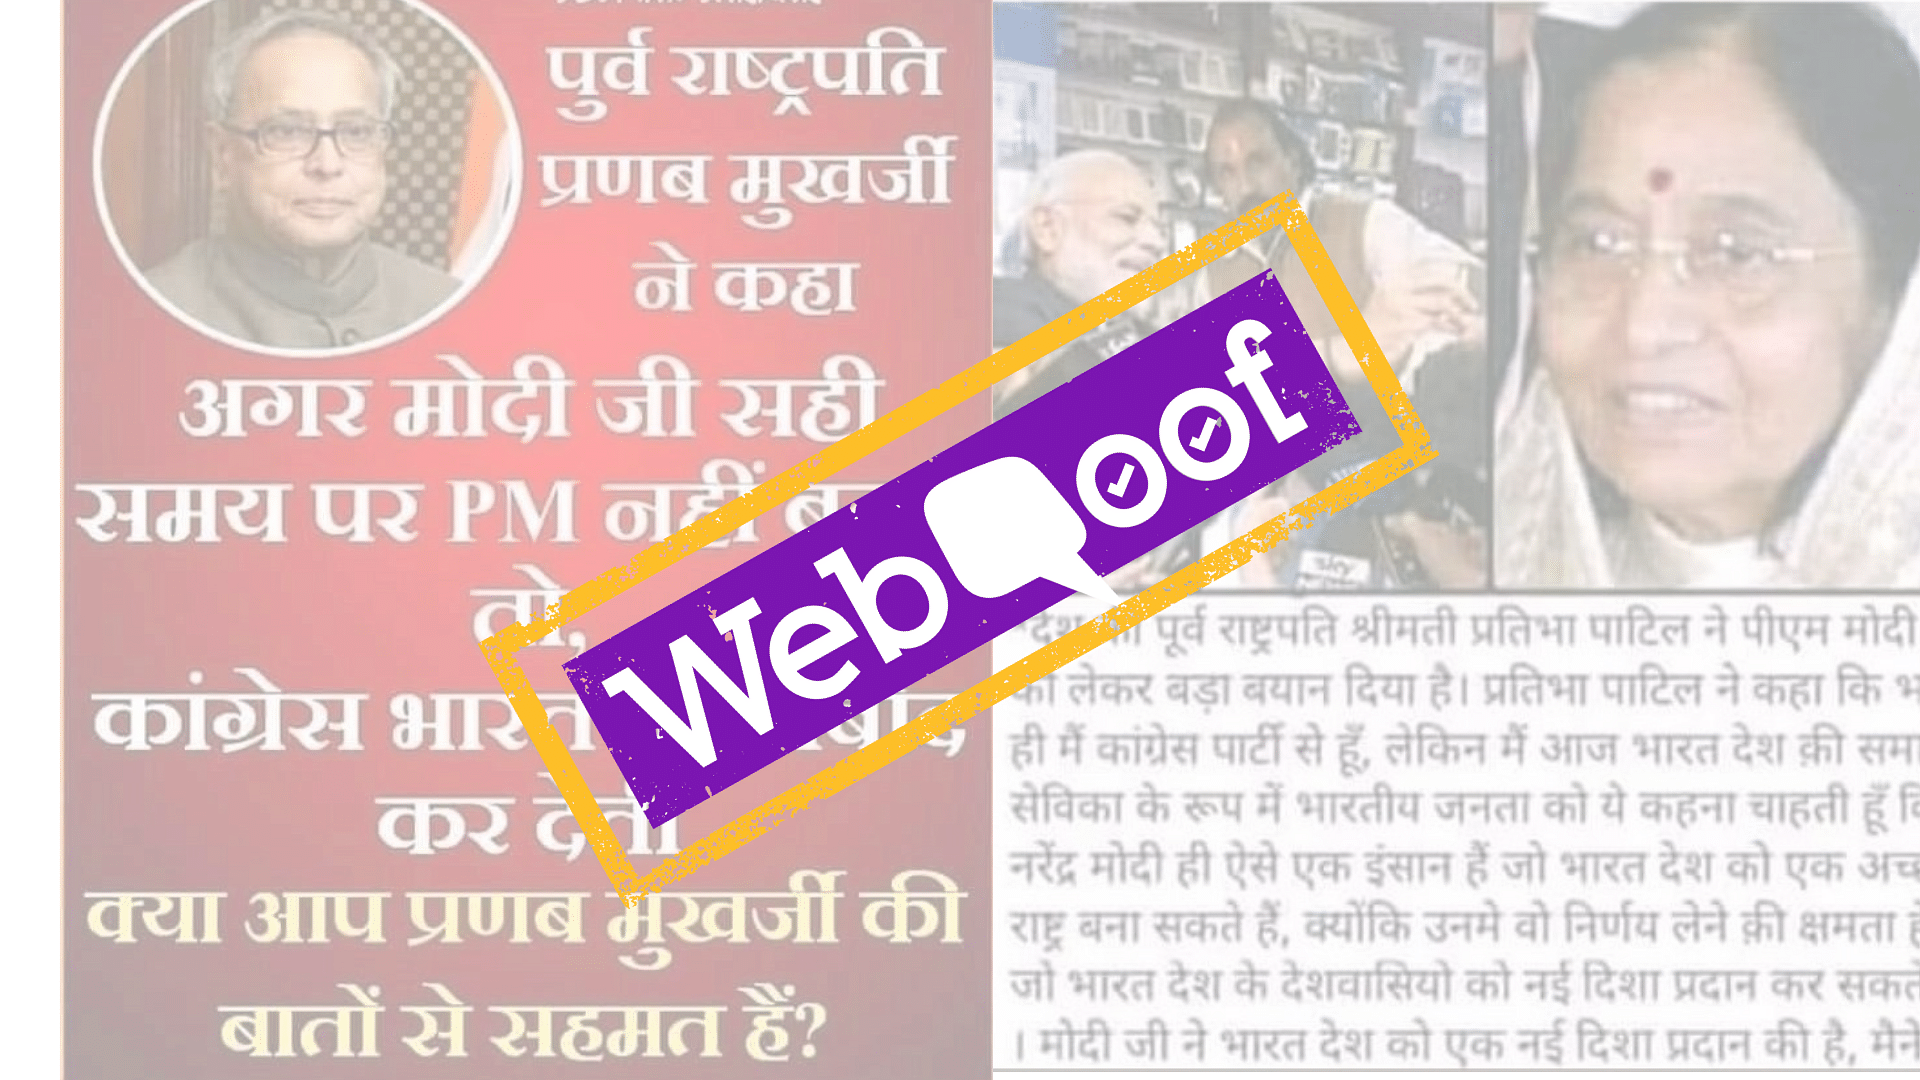 Messages falsely claiming former Presidents Pranab Mukherjee and Pratibha Patil praised Prime Minister Modi have gone viral